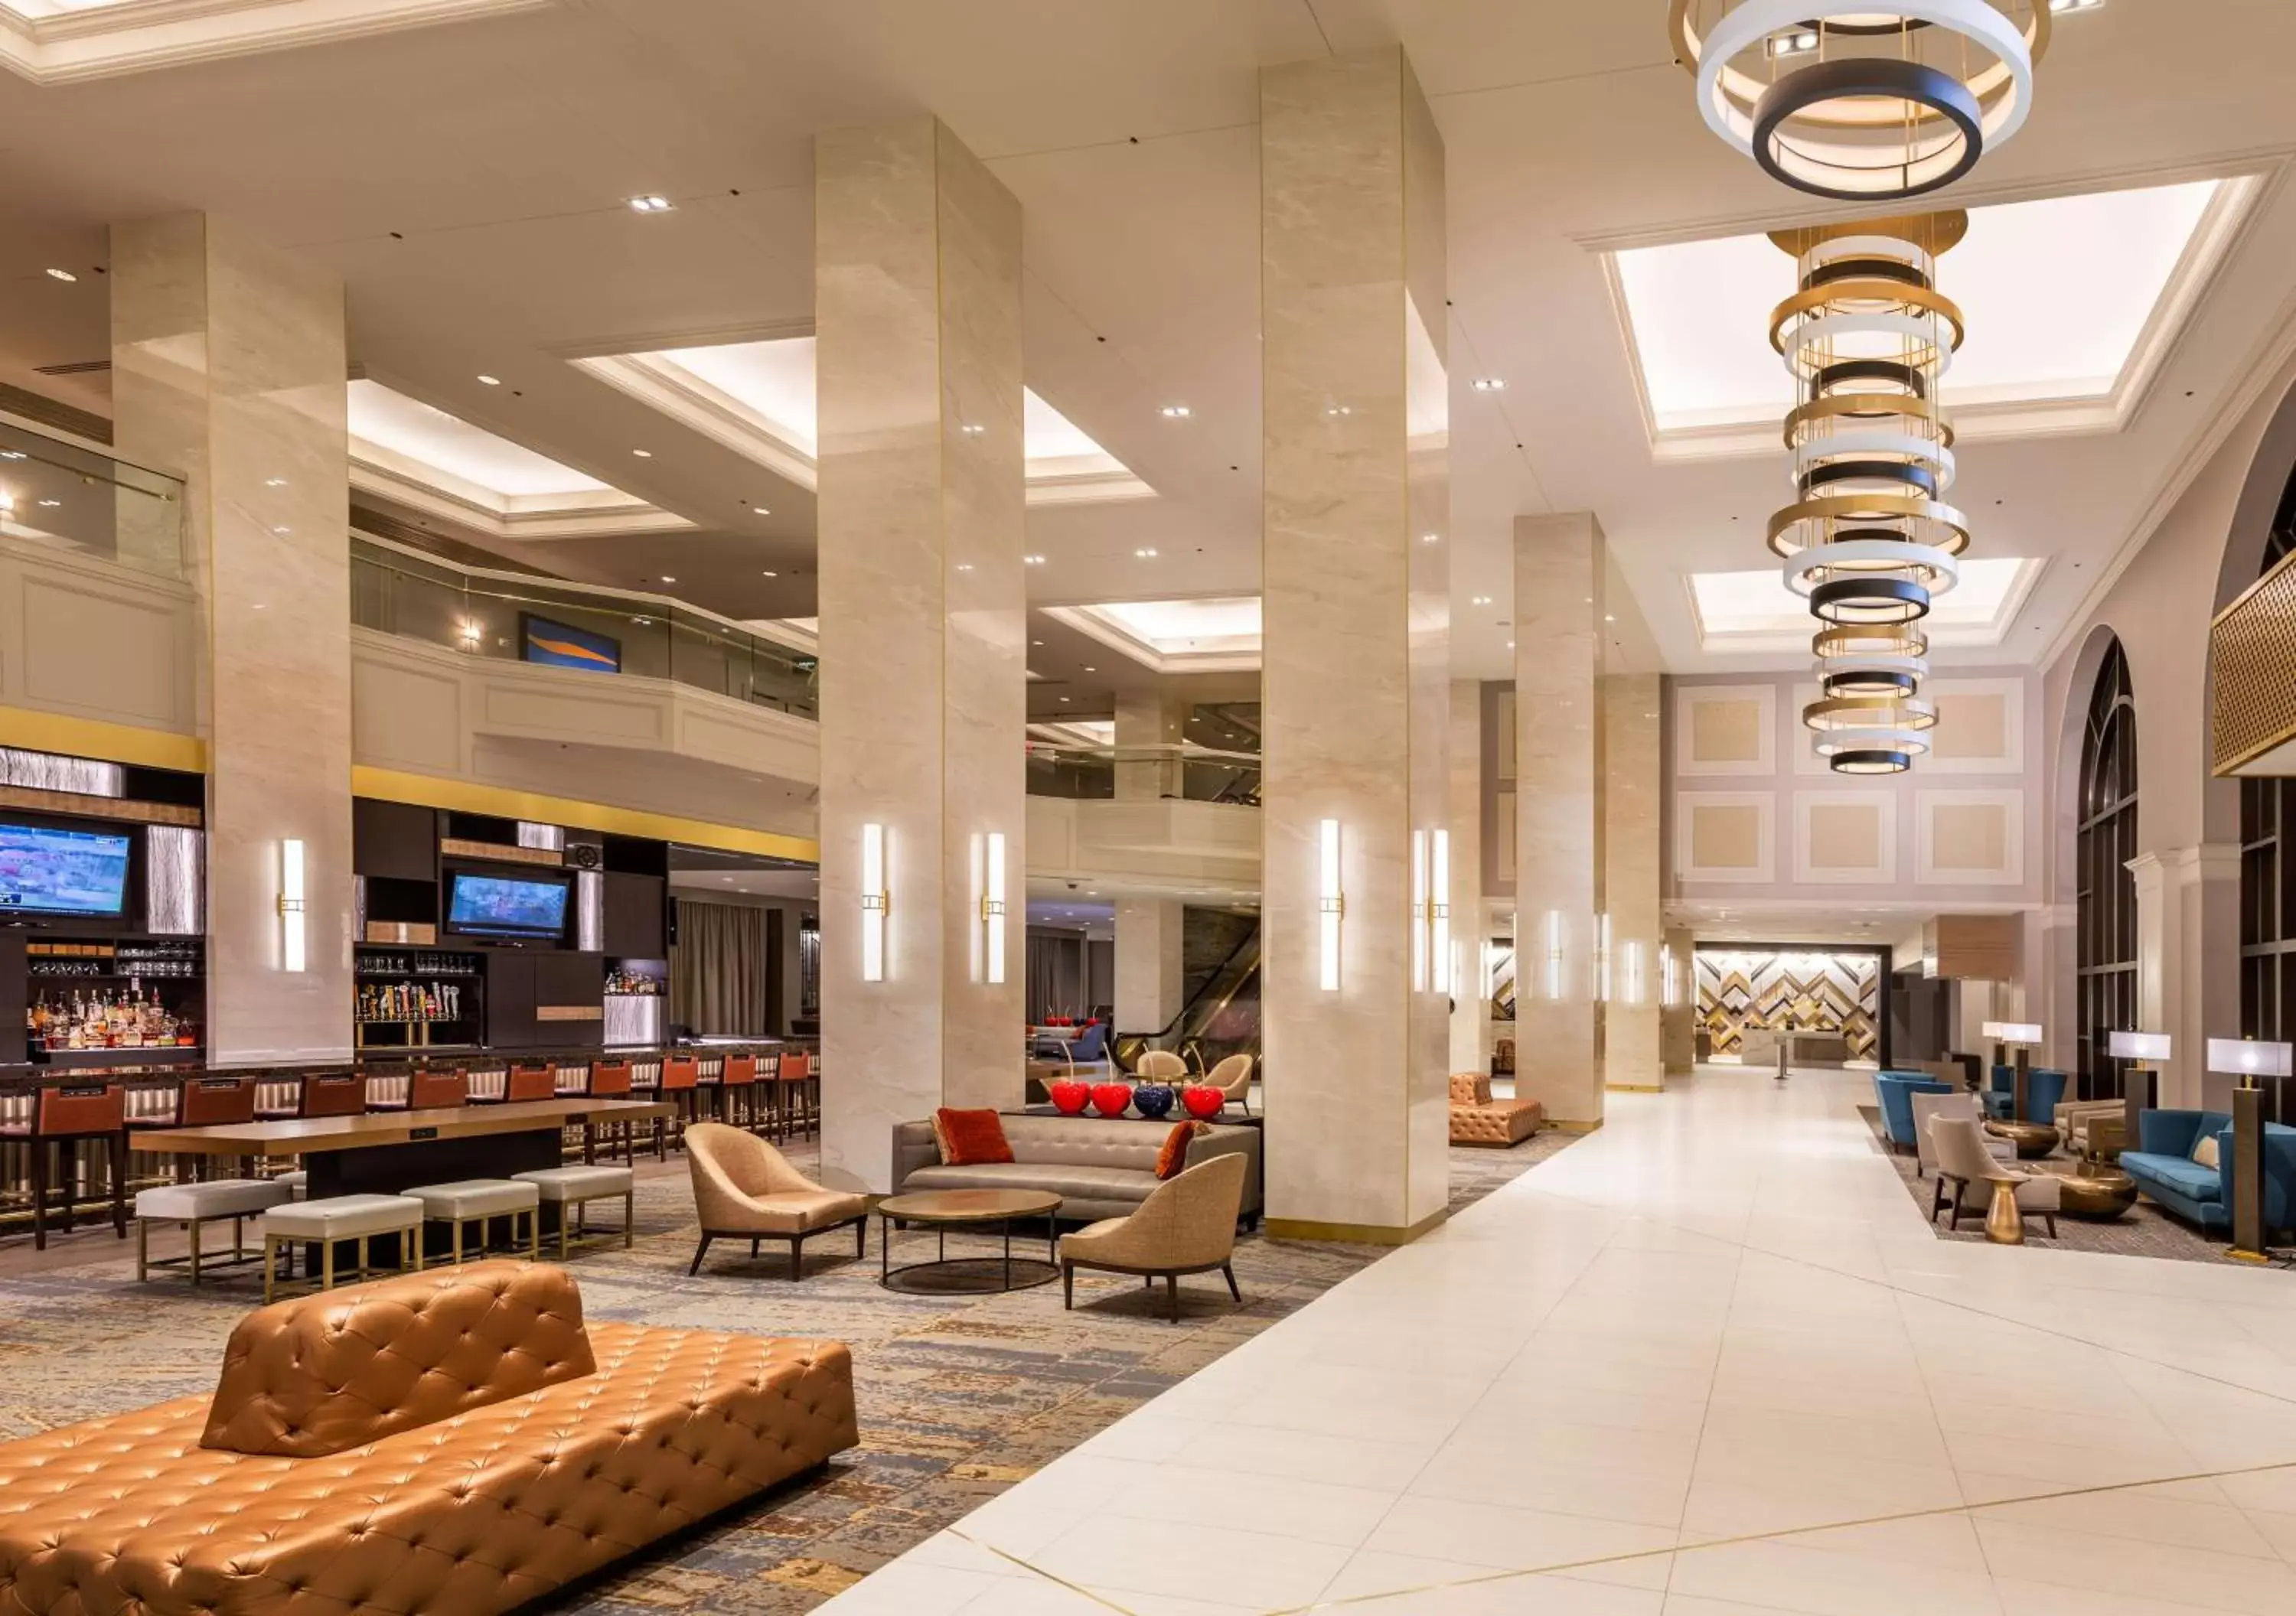 Lobby or reception in Hilton Minneapolis